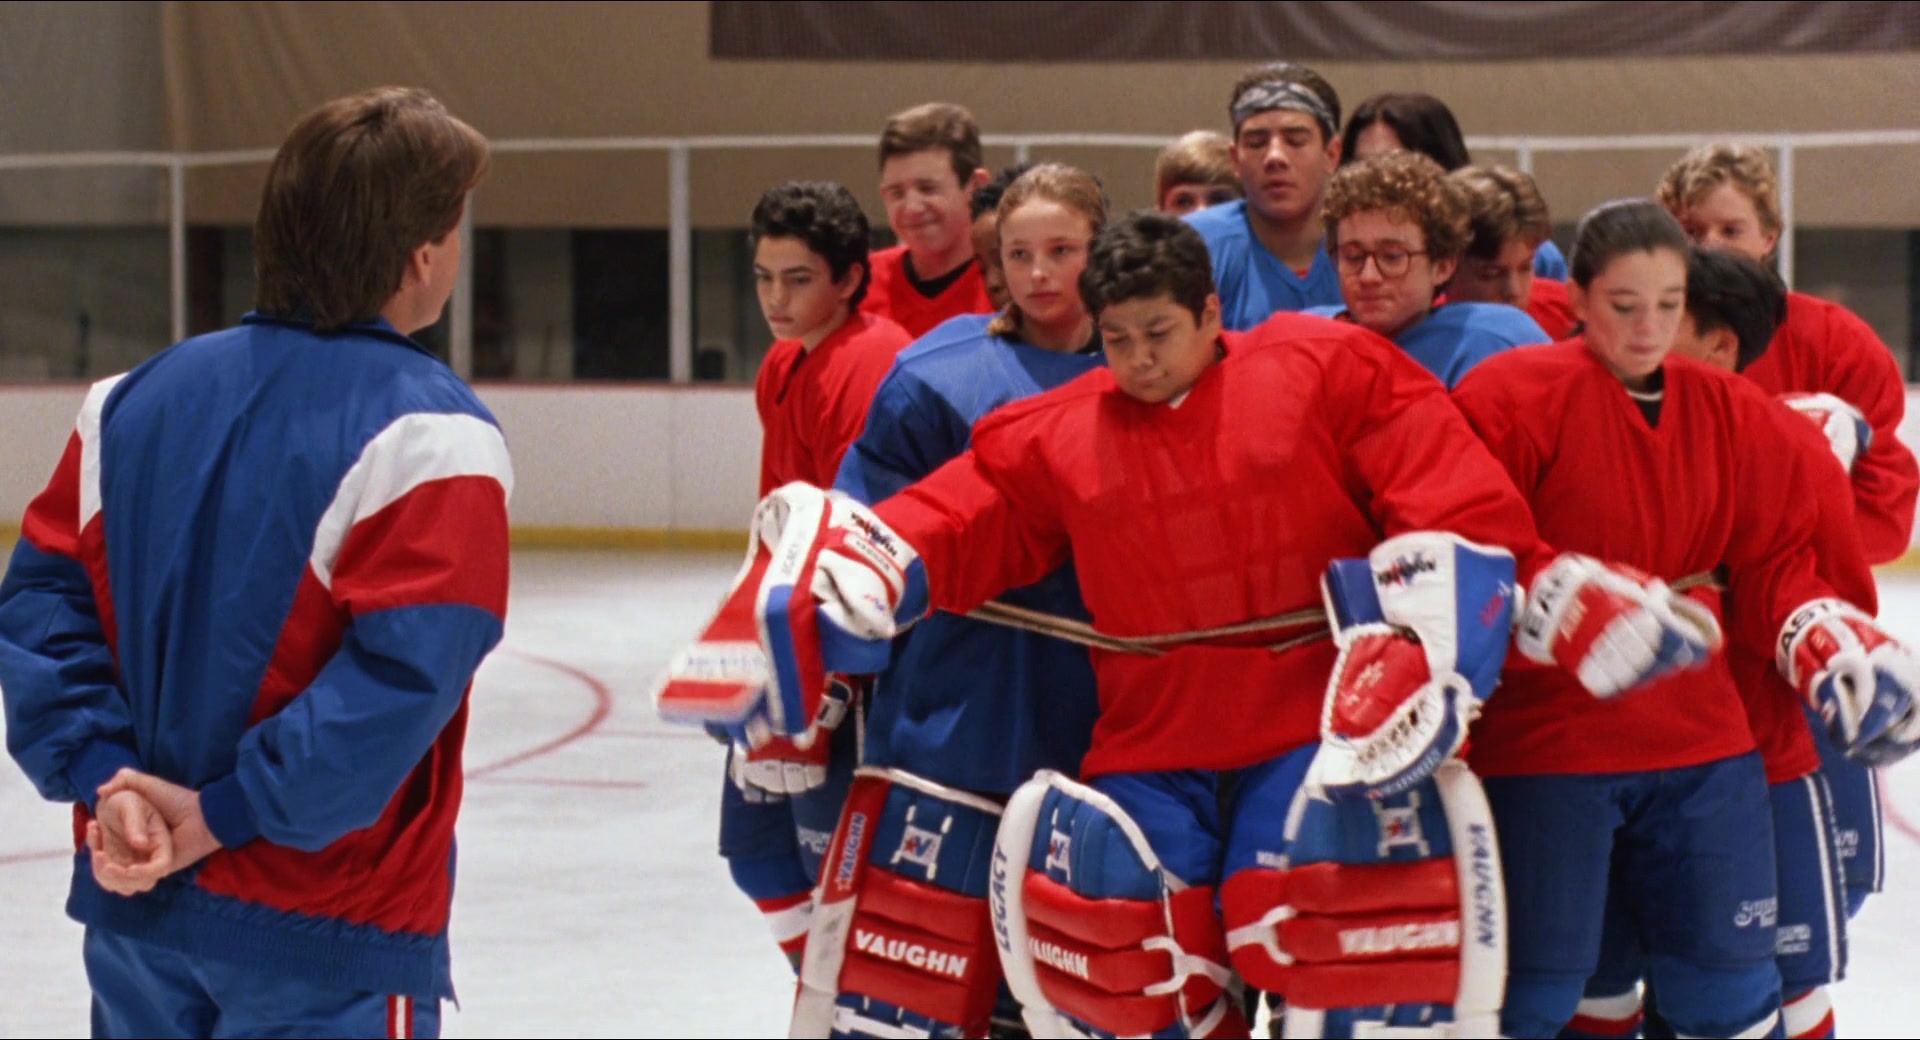 Vaughn Hockey Goalie Equipment In D2: The Mighty Ducks (1994)